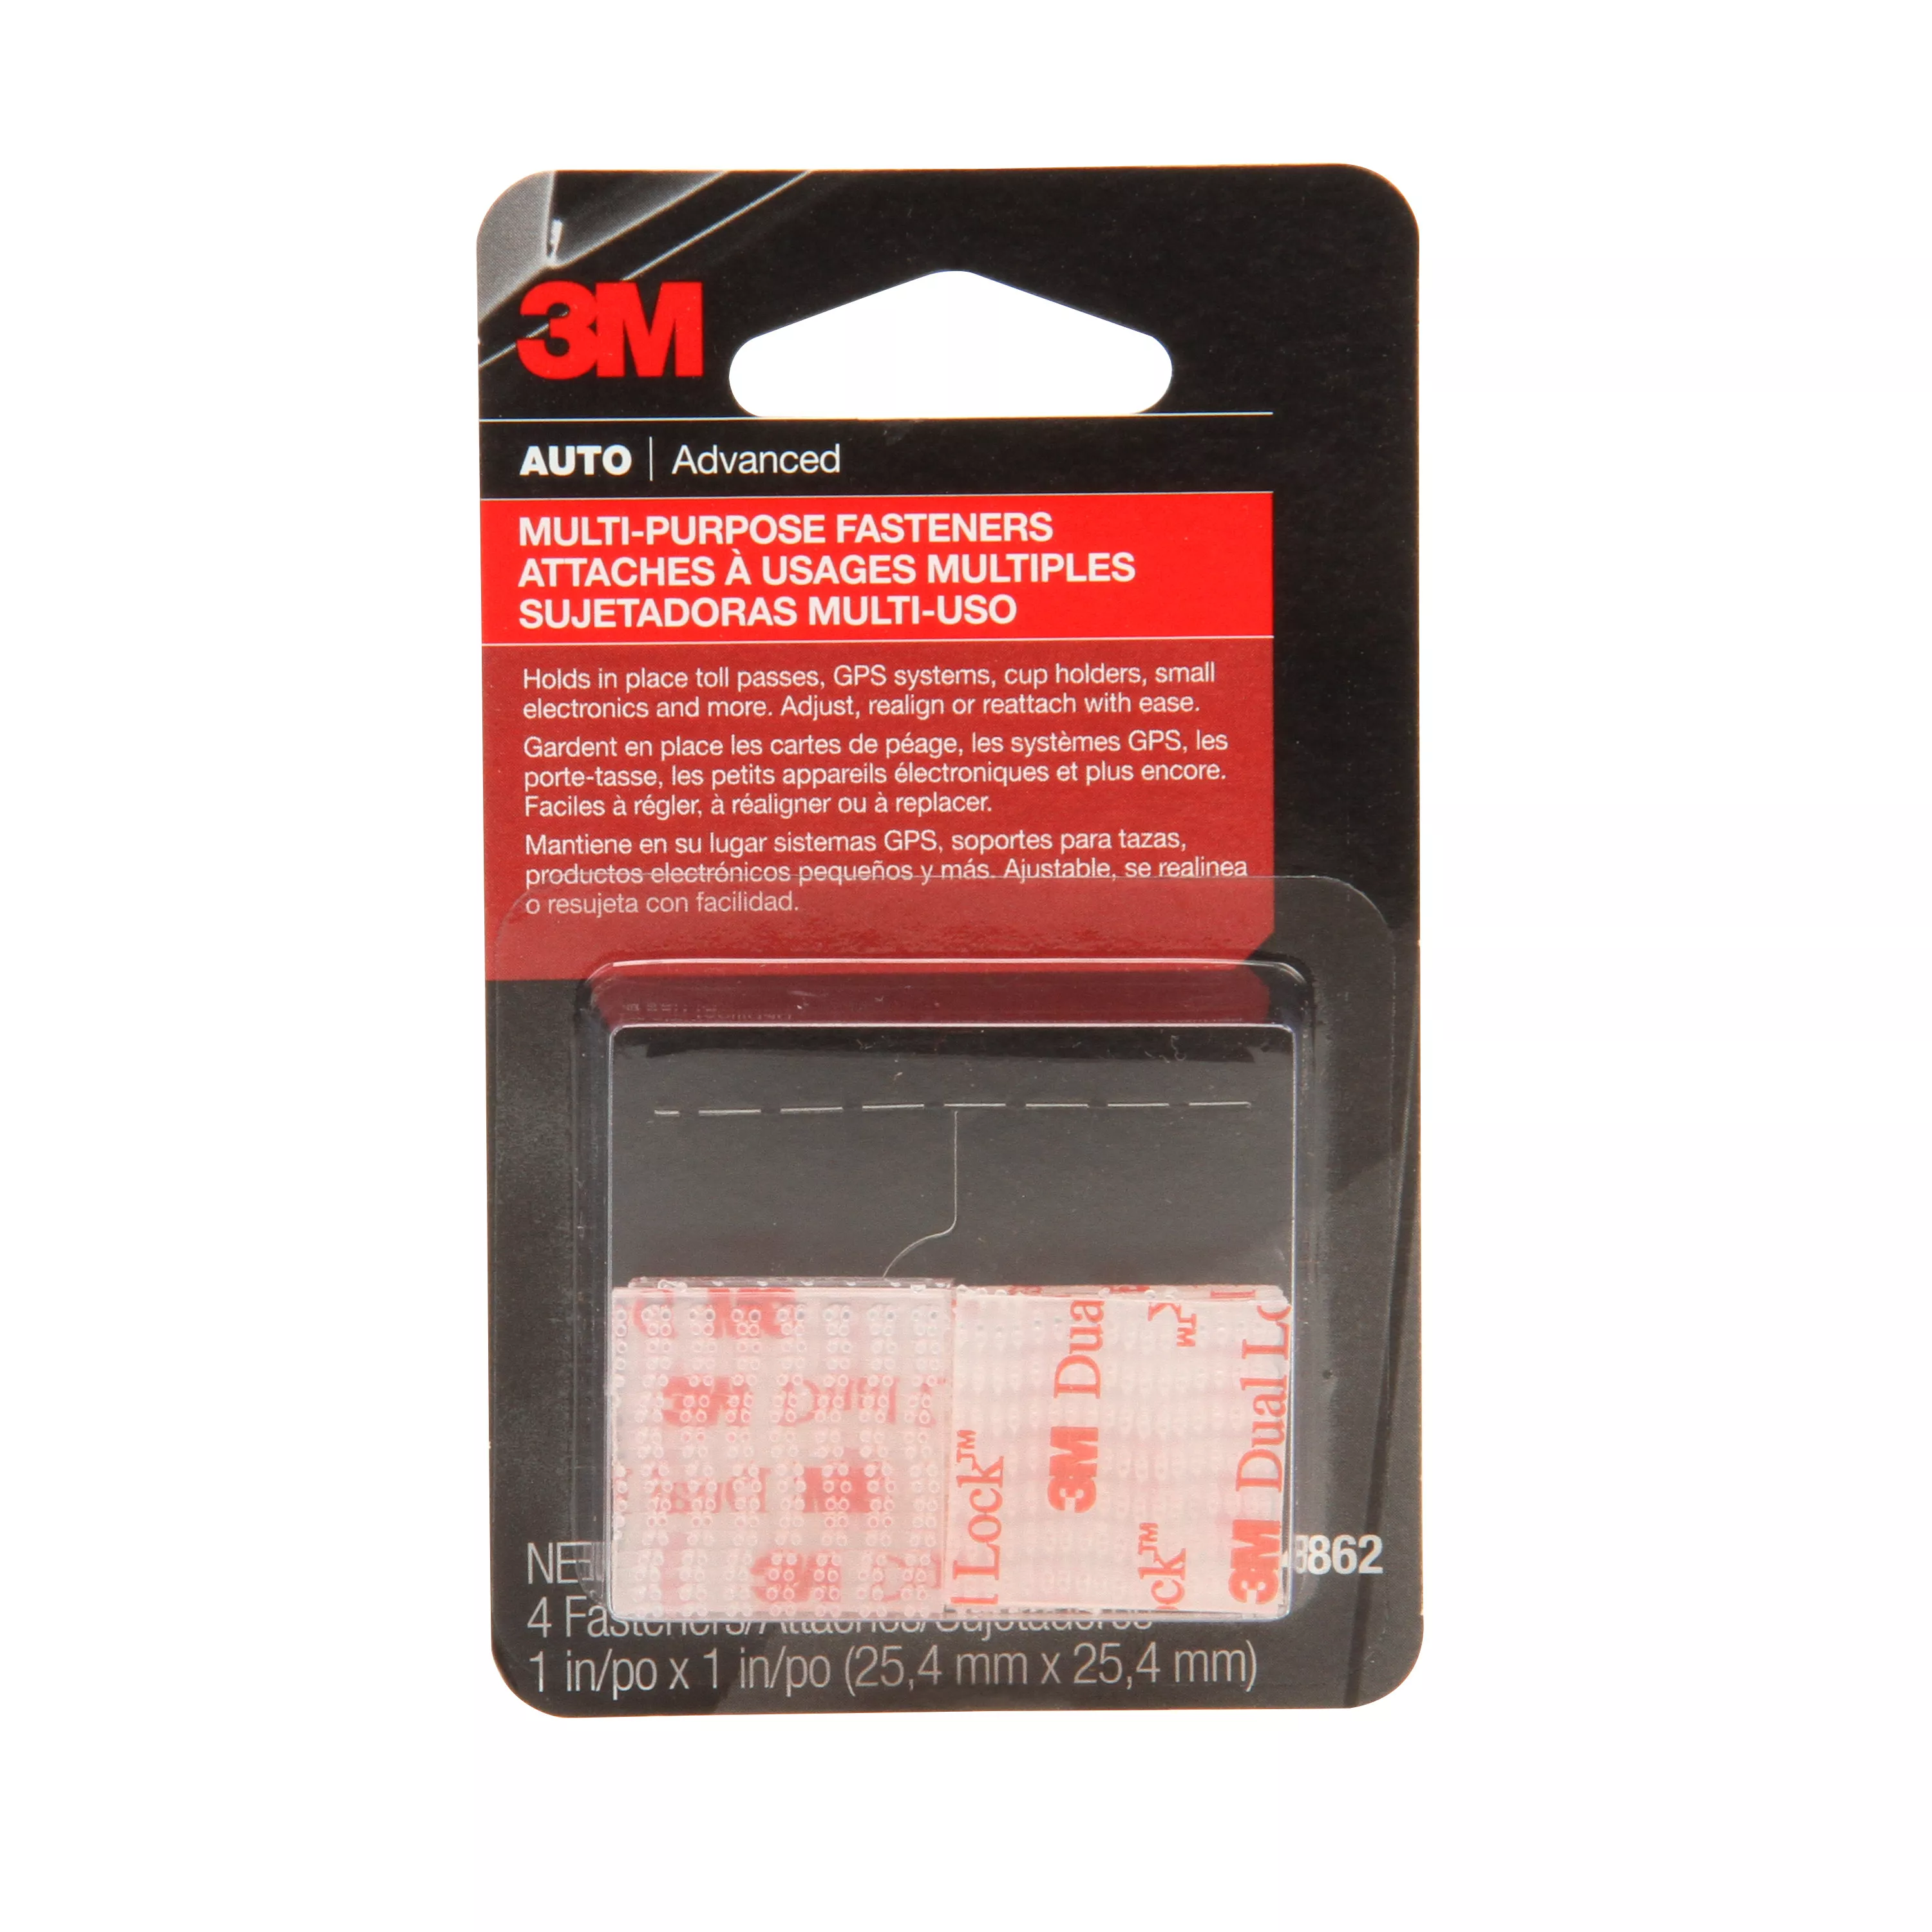 3M™ Dual Lock™ Reclosable Fasteners, 04862, 1 in X 1 in, 4 pair per
pack, 24 per case